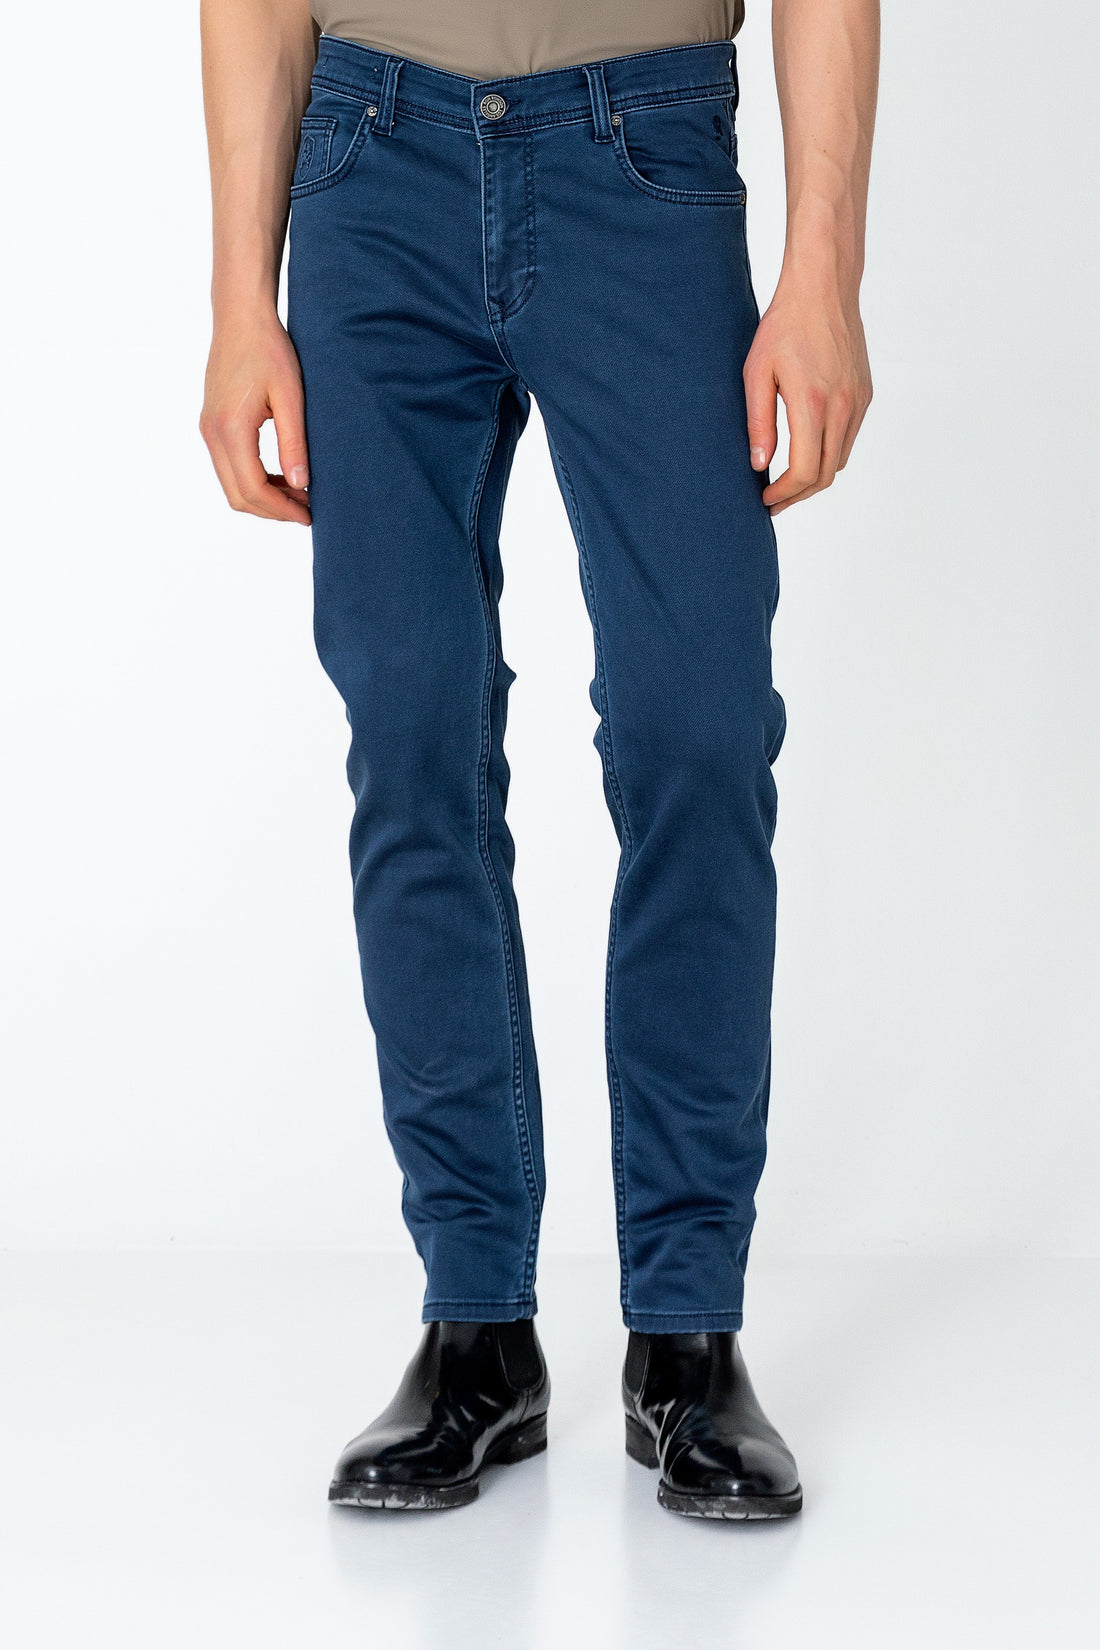 Super Soft 5-pocket Style Pants - Dark Navy